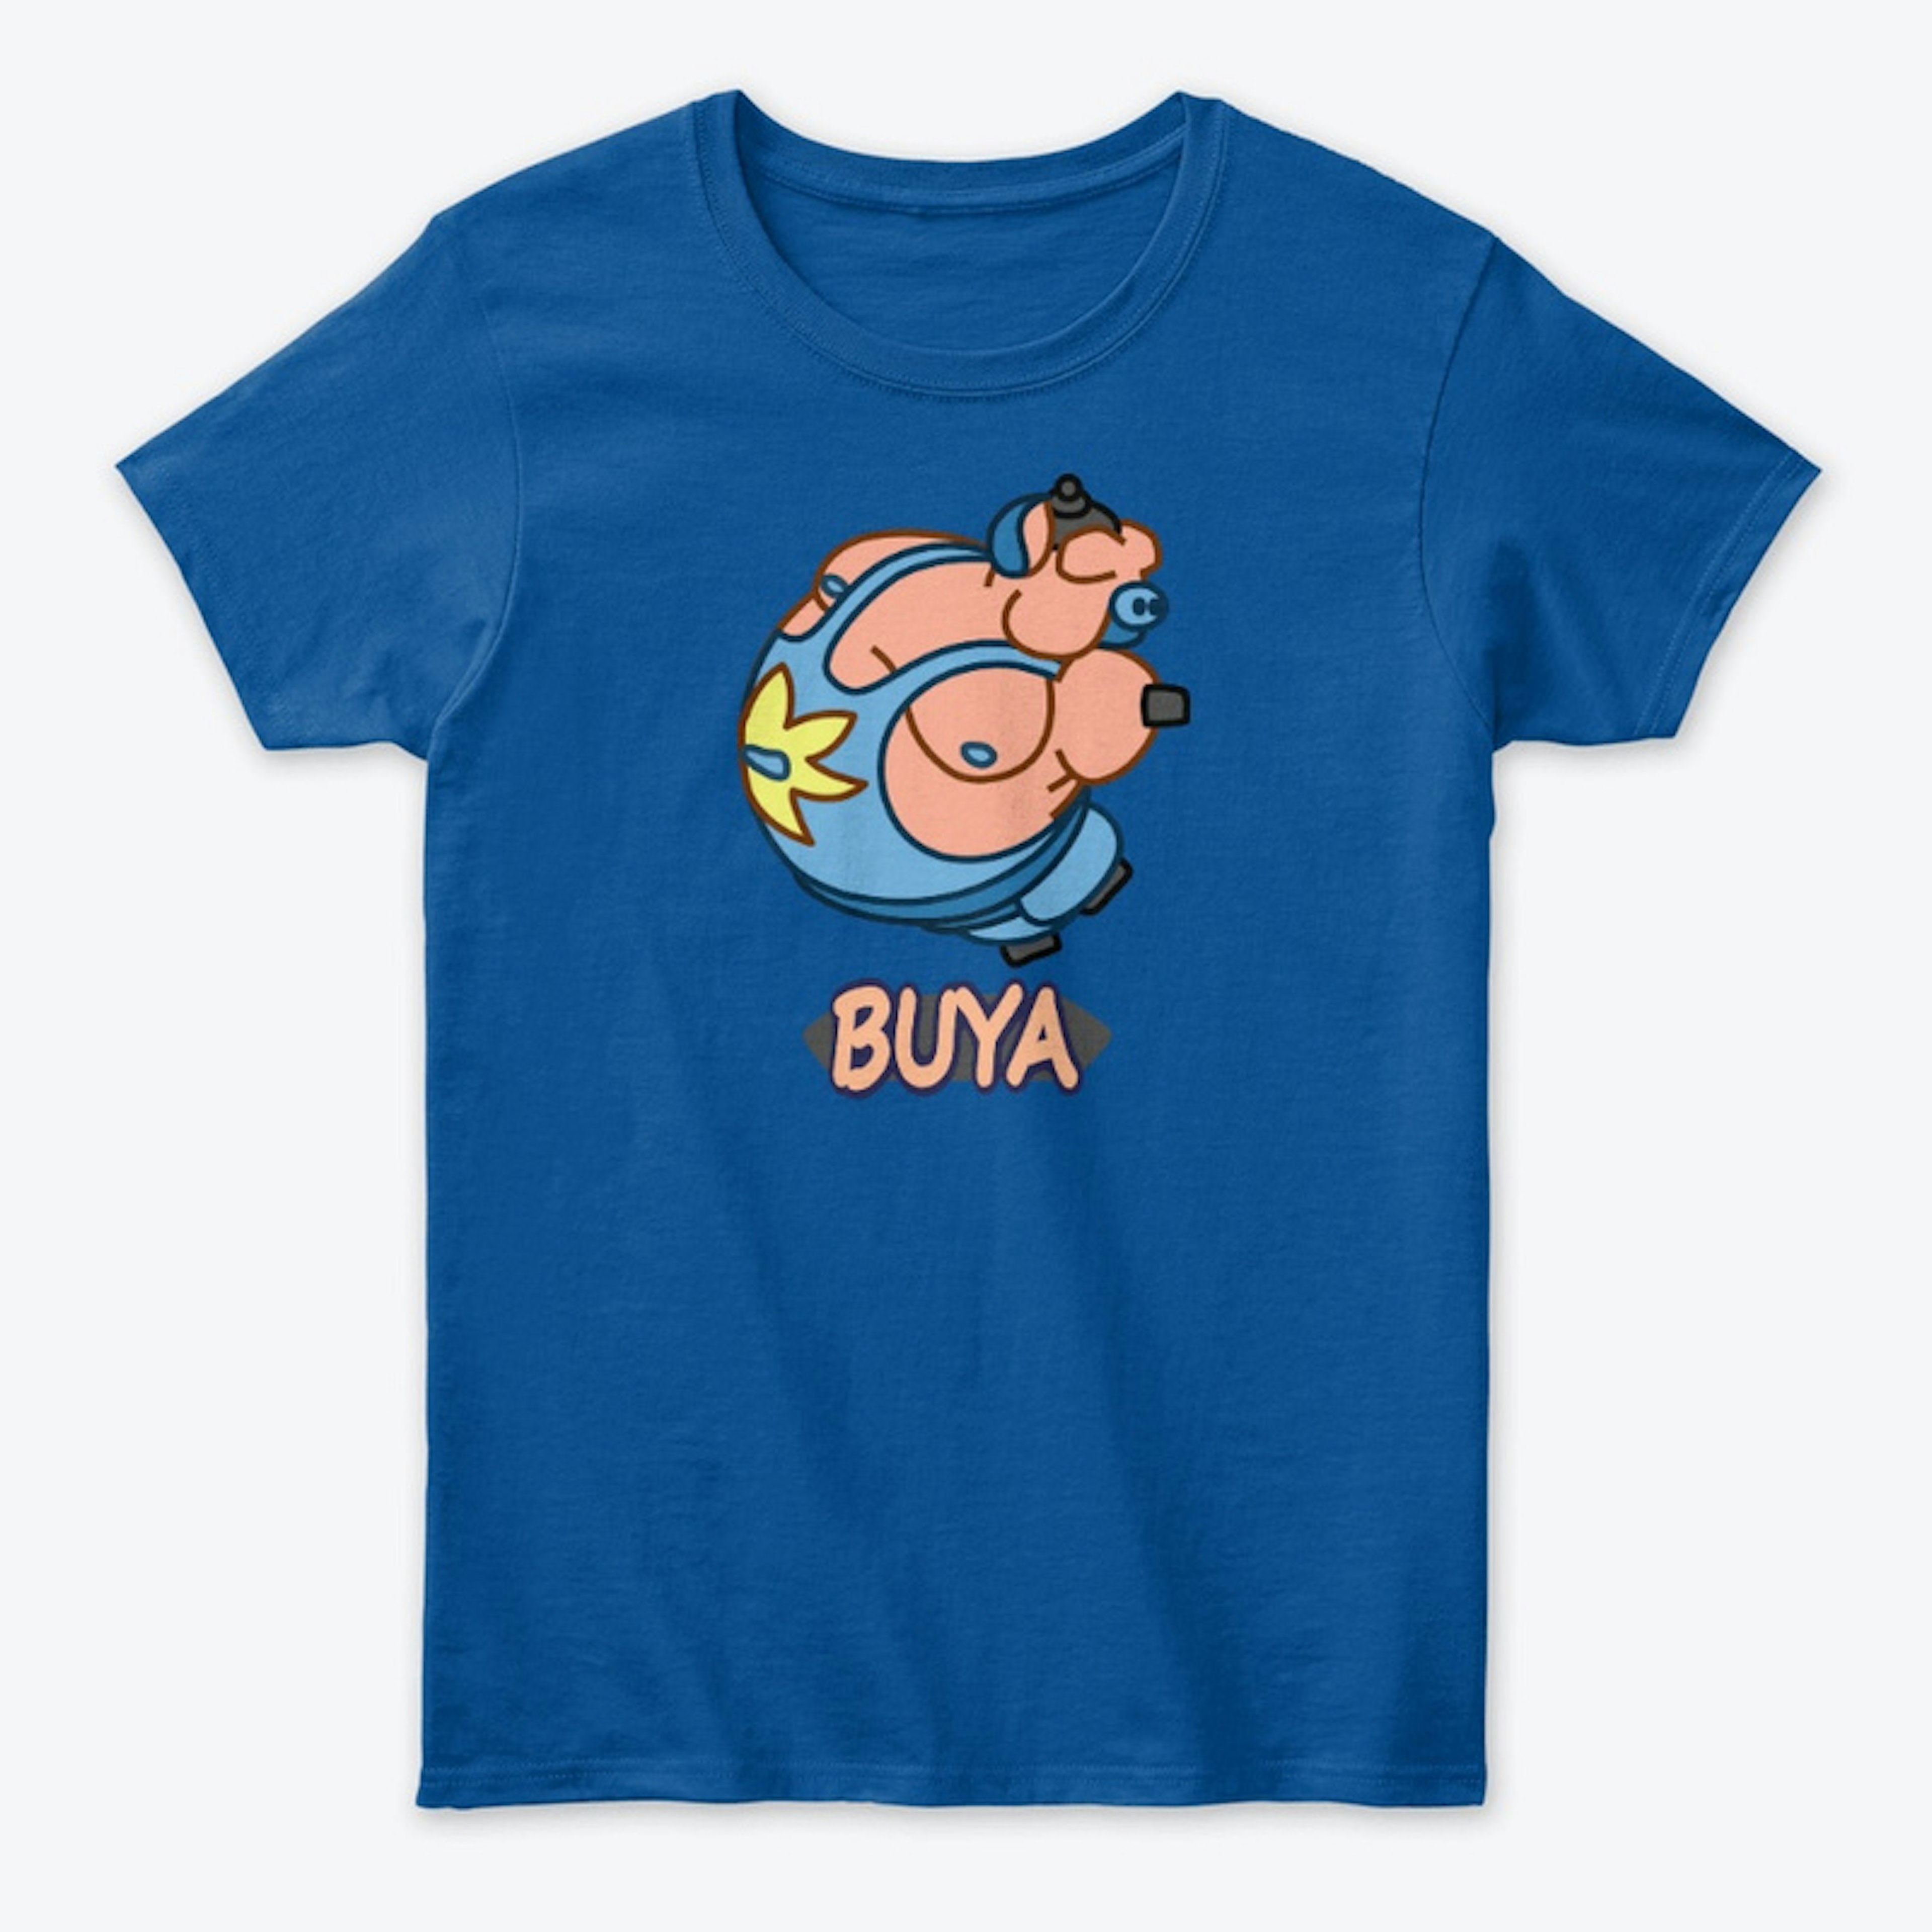 Buya shirt